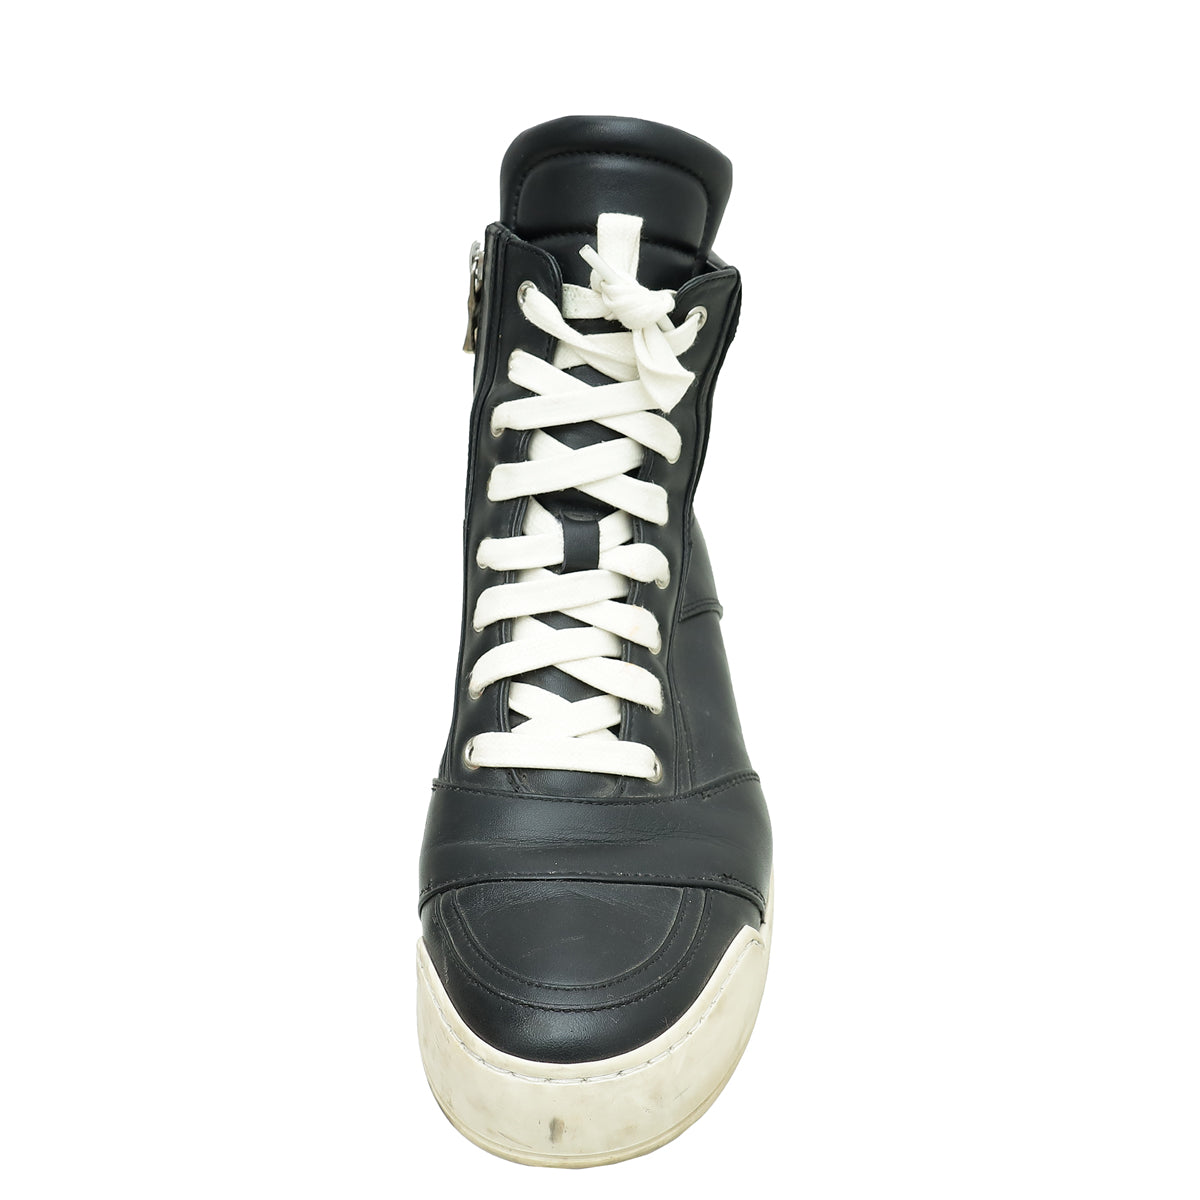 Balmain Black Ankle High Sneaker Boot 40